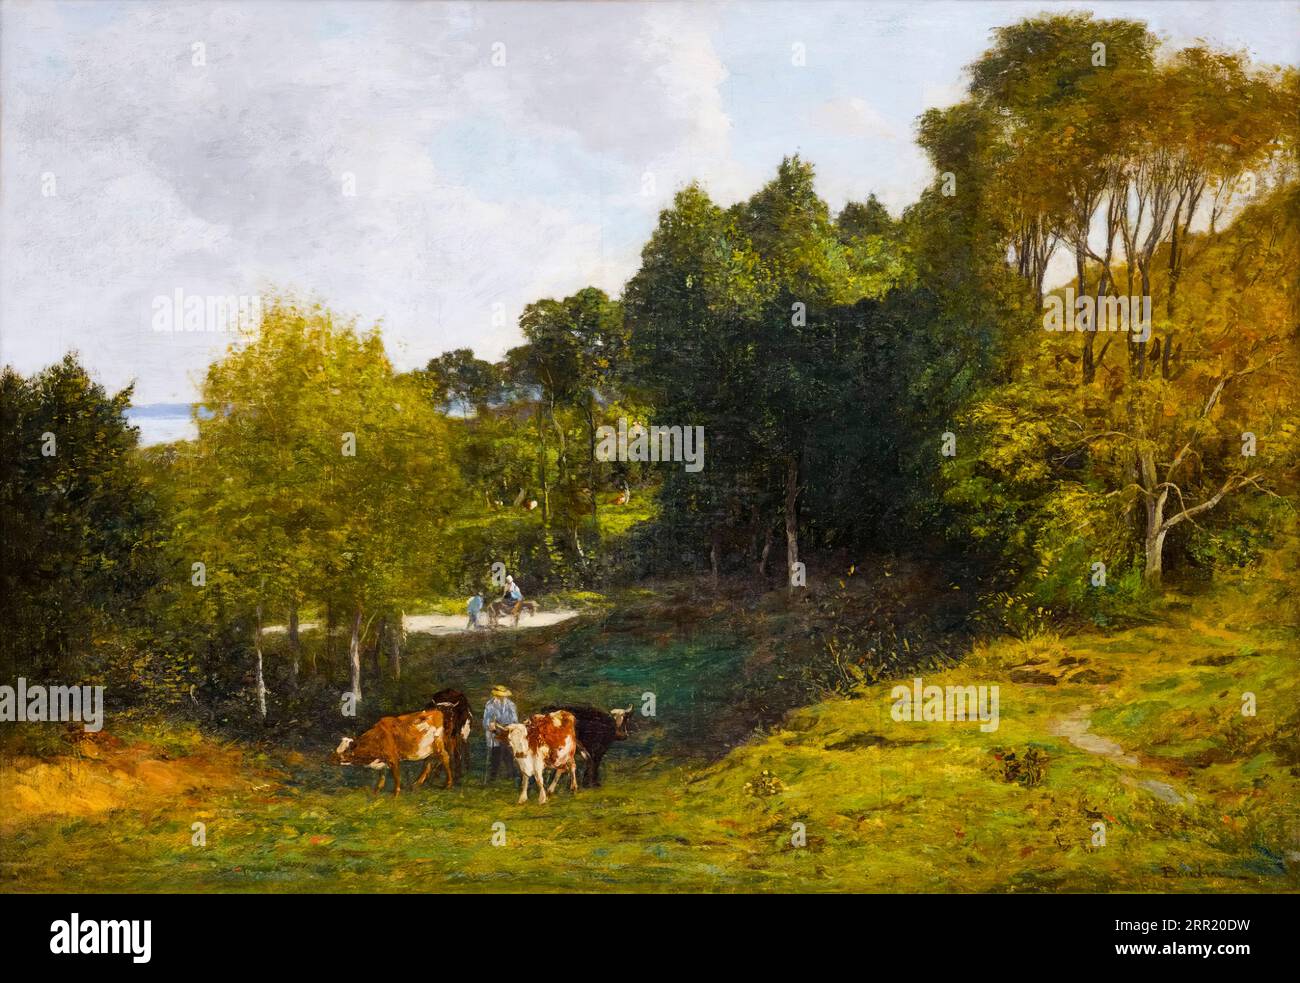 Eugène Boudin, Environs d'Honfleur (Around Honfleur), landscape painting in oil on canvas, 1854-1857 Stock Photo